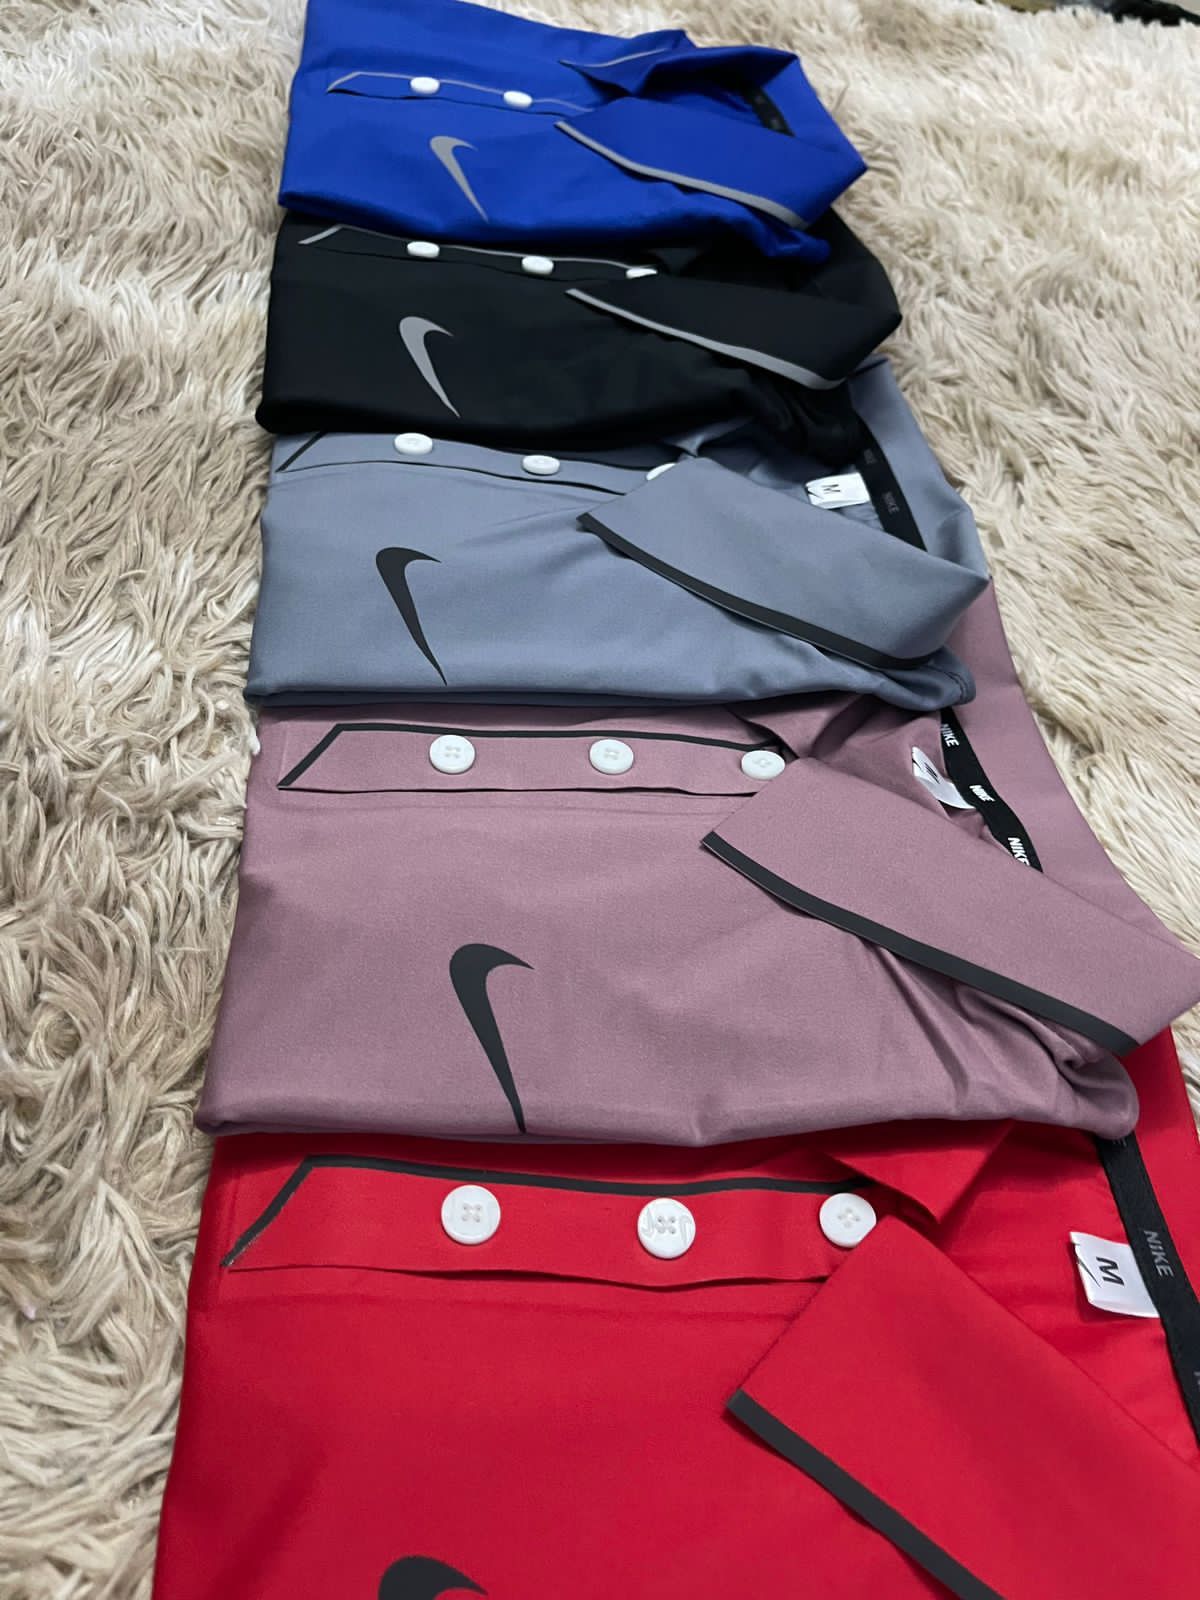 Nike Dri-FIT Women’s Golf Polo